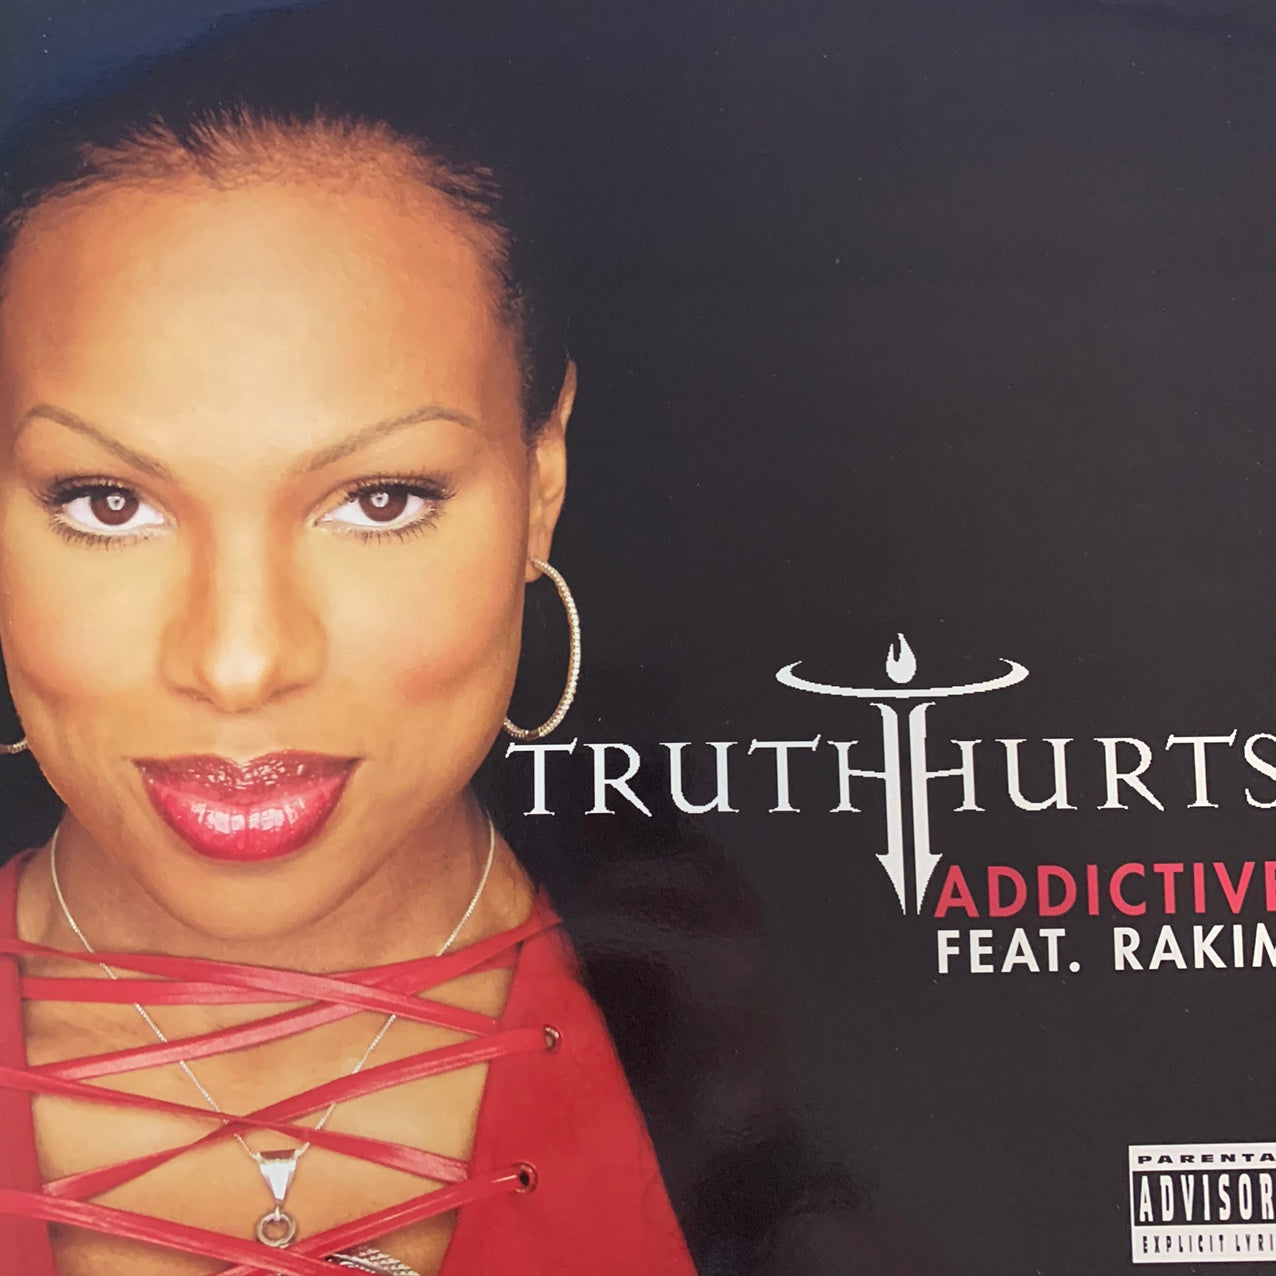 Truth Hurts Feat Rakim “Addictive” 3 Version 12inch Vinyl